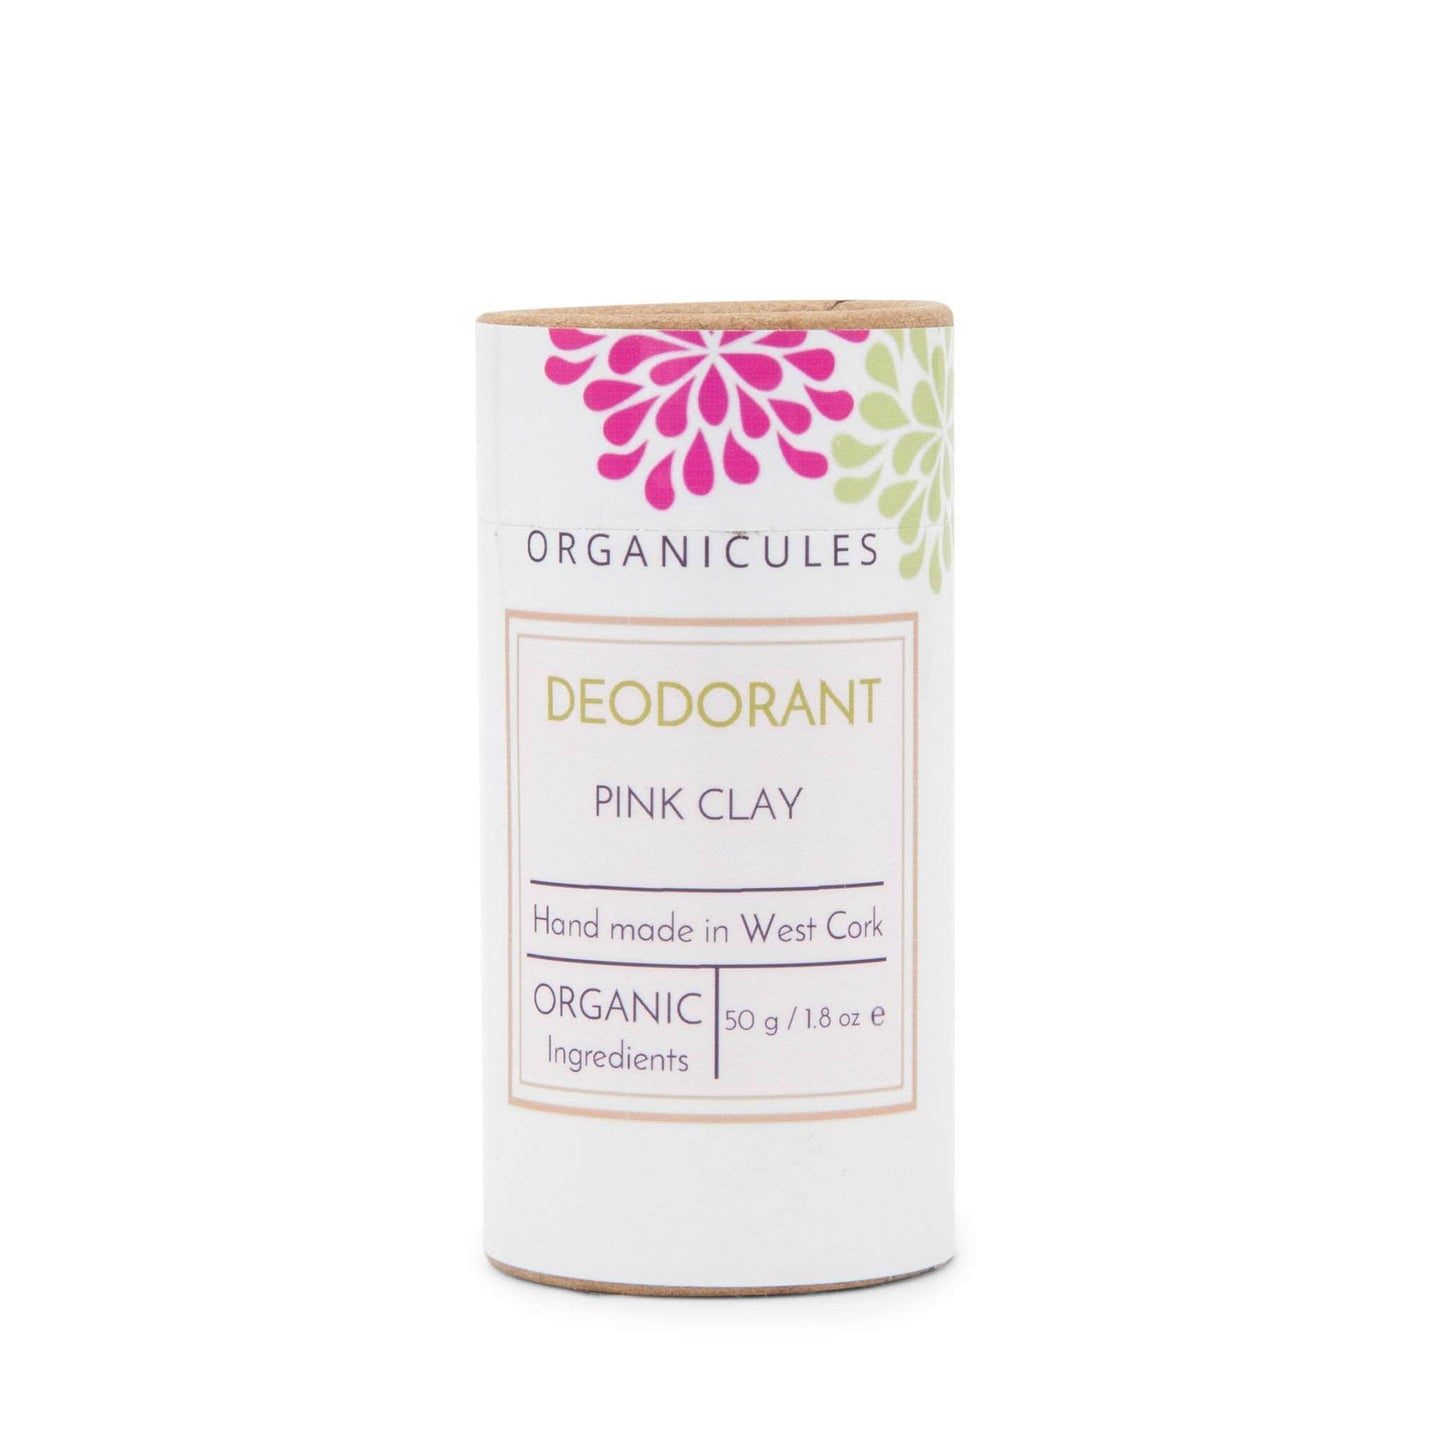 Organicules Deodorant Organicules Natural Deodorant - Pink Clay